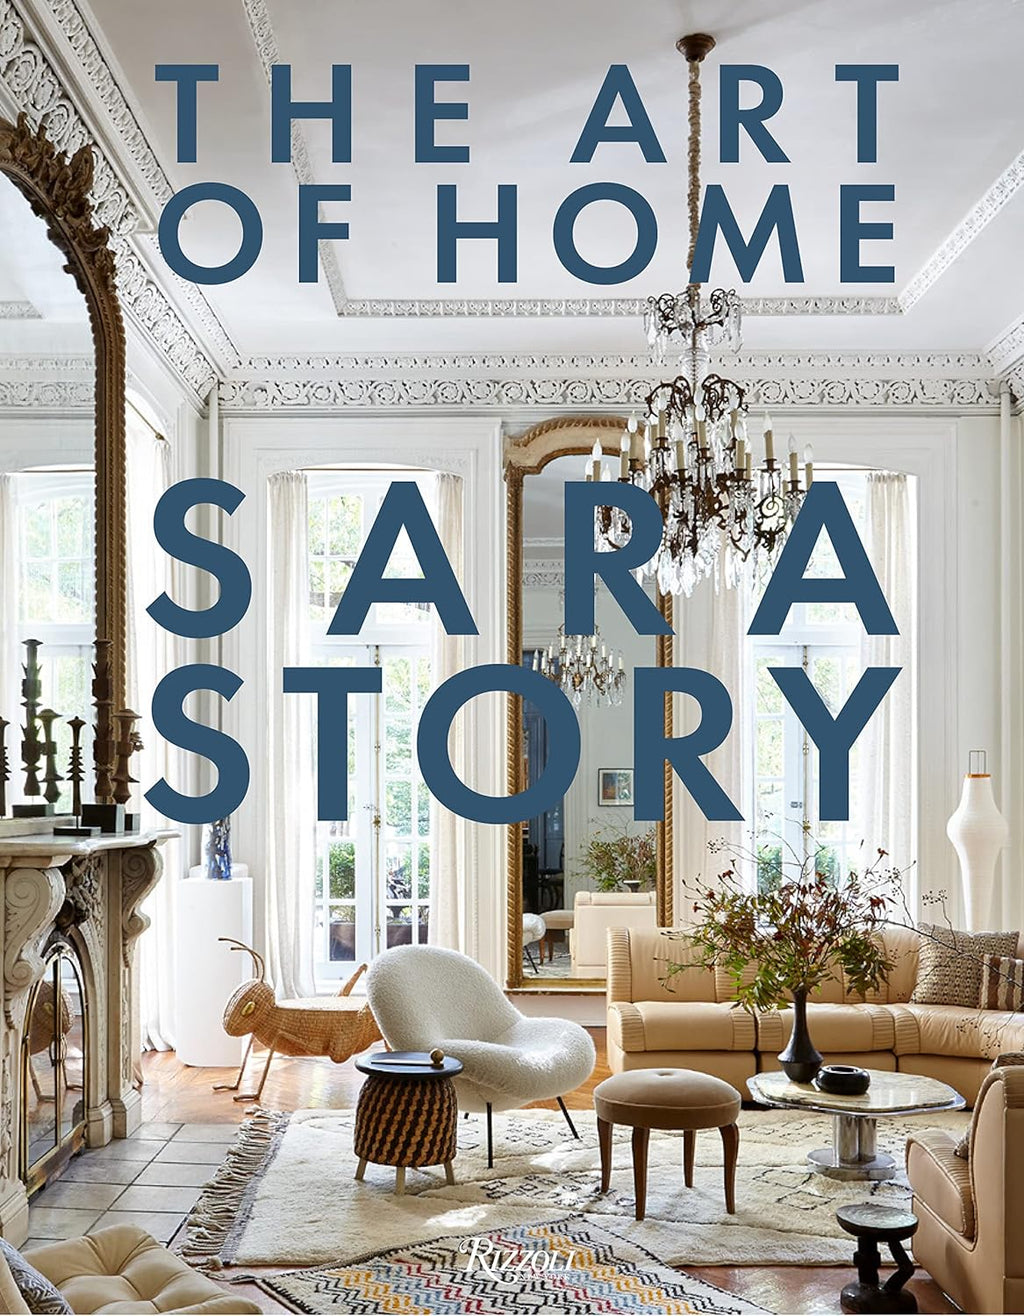 Sara Story Art of Home